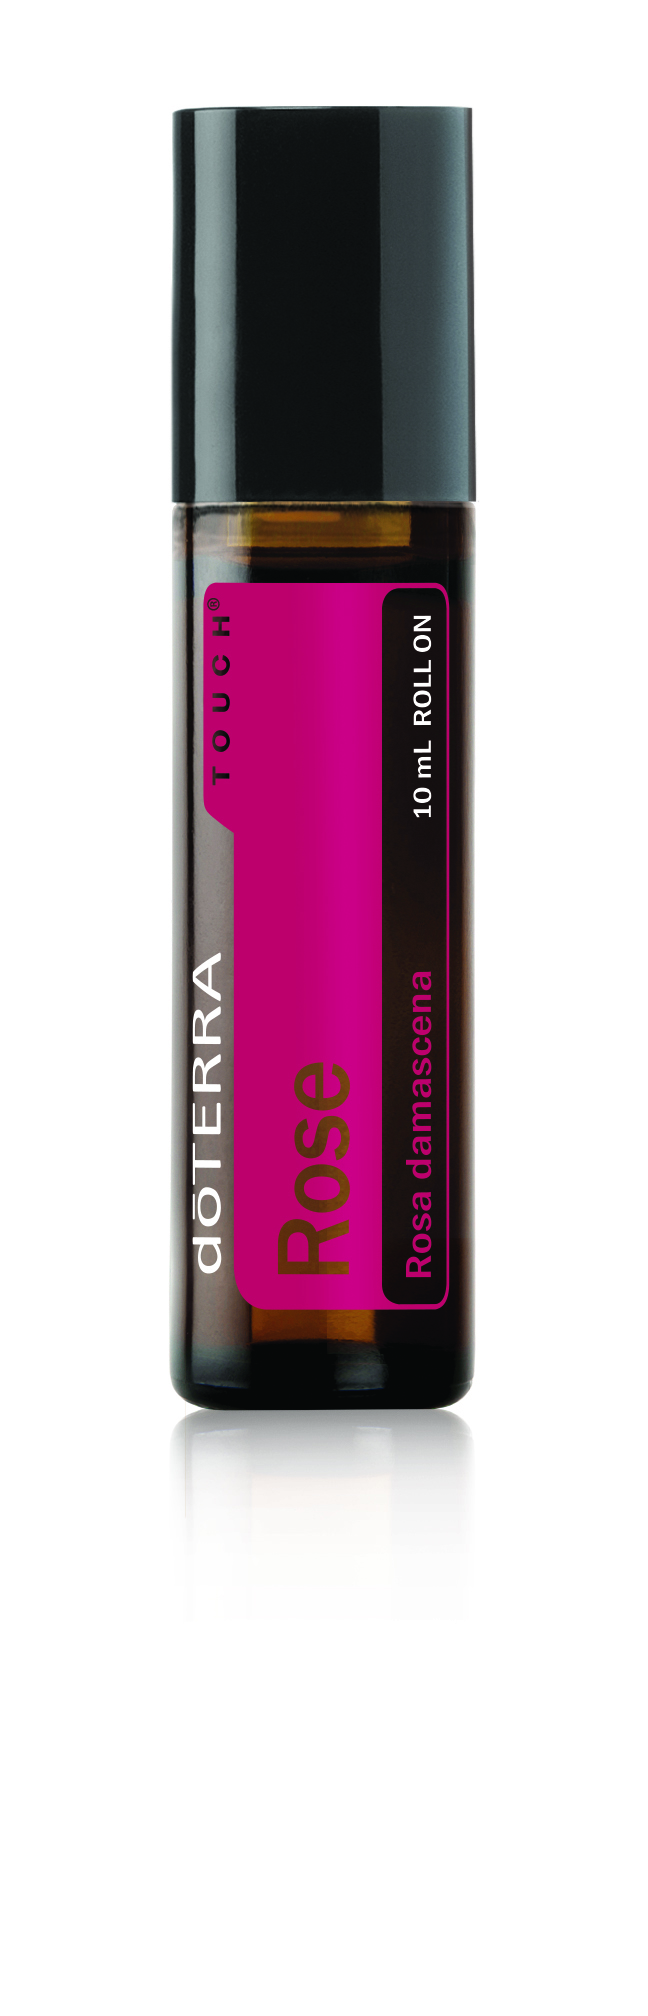 doTERRA Rose Touch | dōTERRA Essential Oils